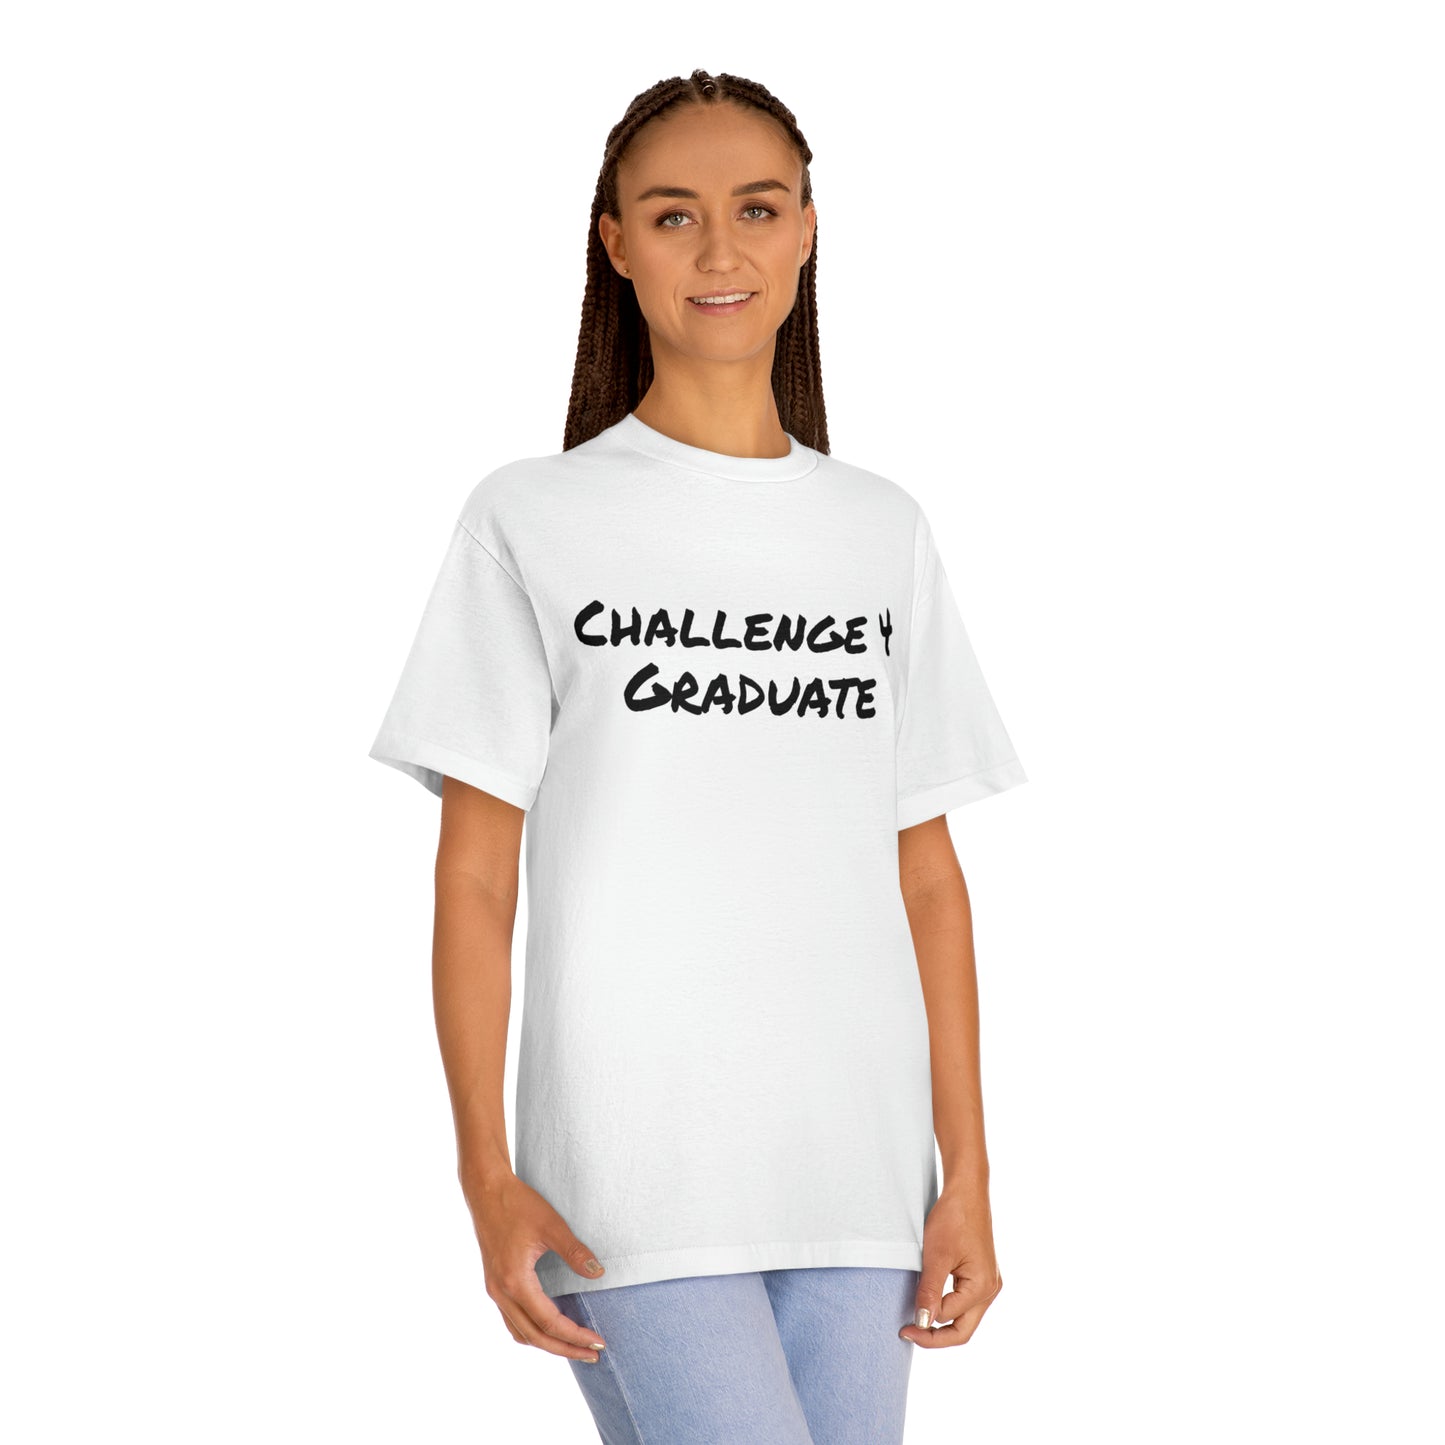 Challenge 4 Graduate TShirt